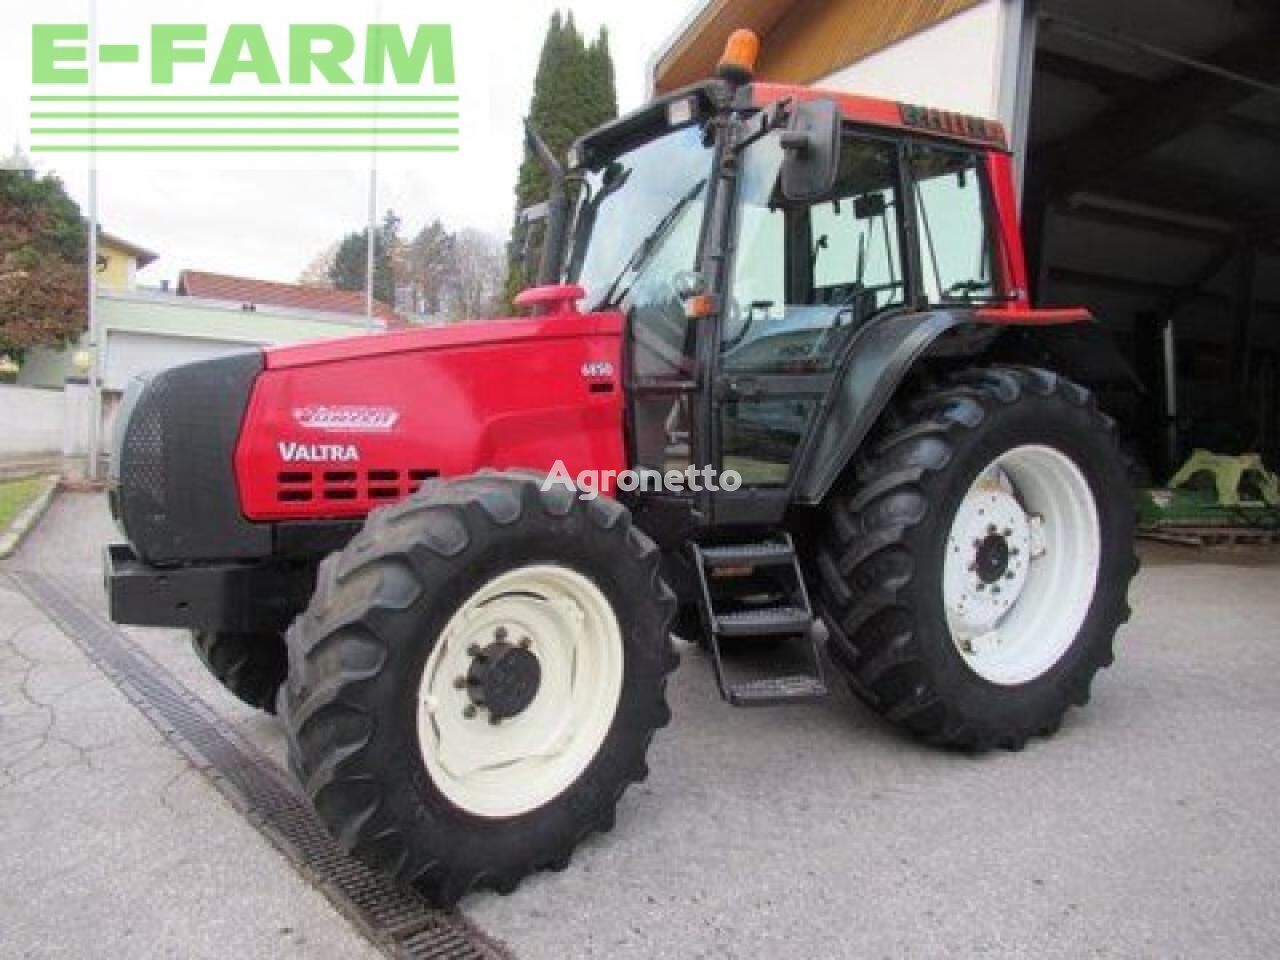 6850 hi tech wheel tractor